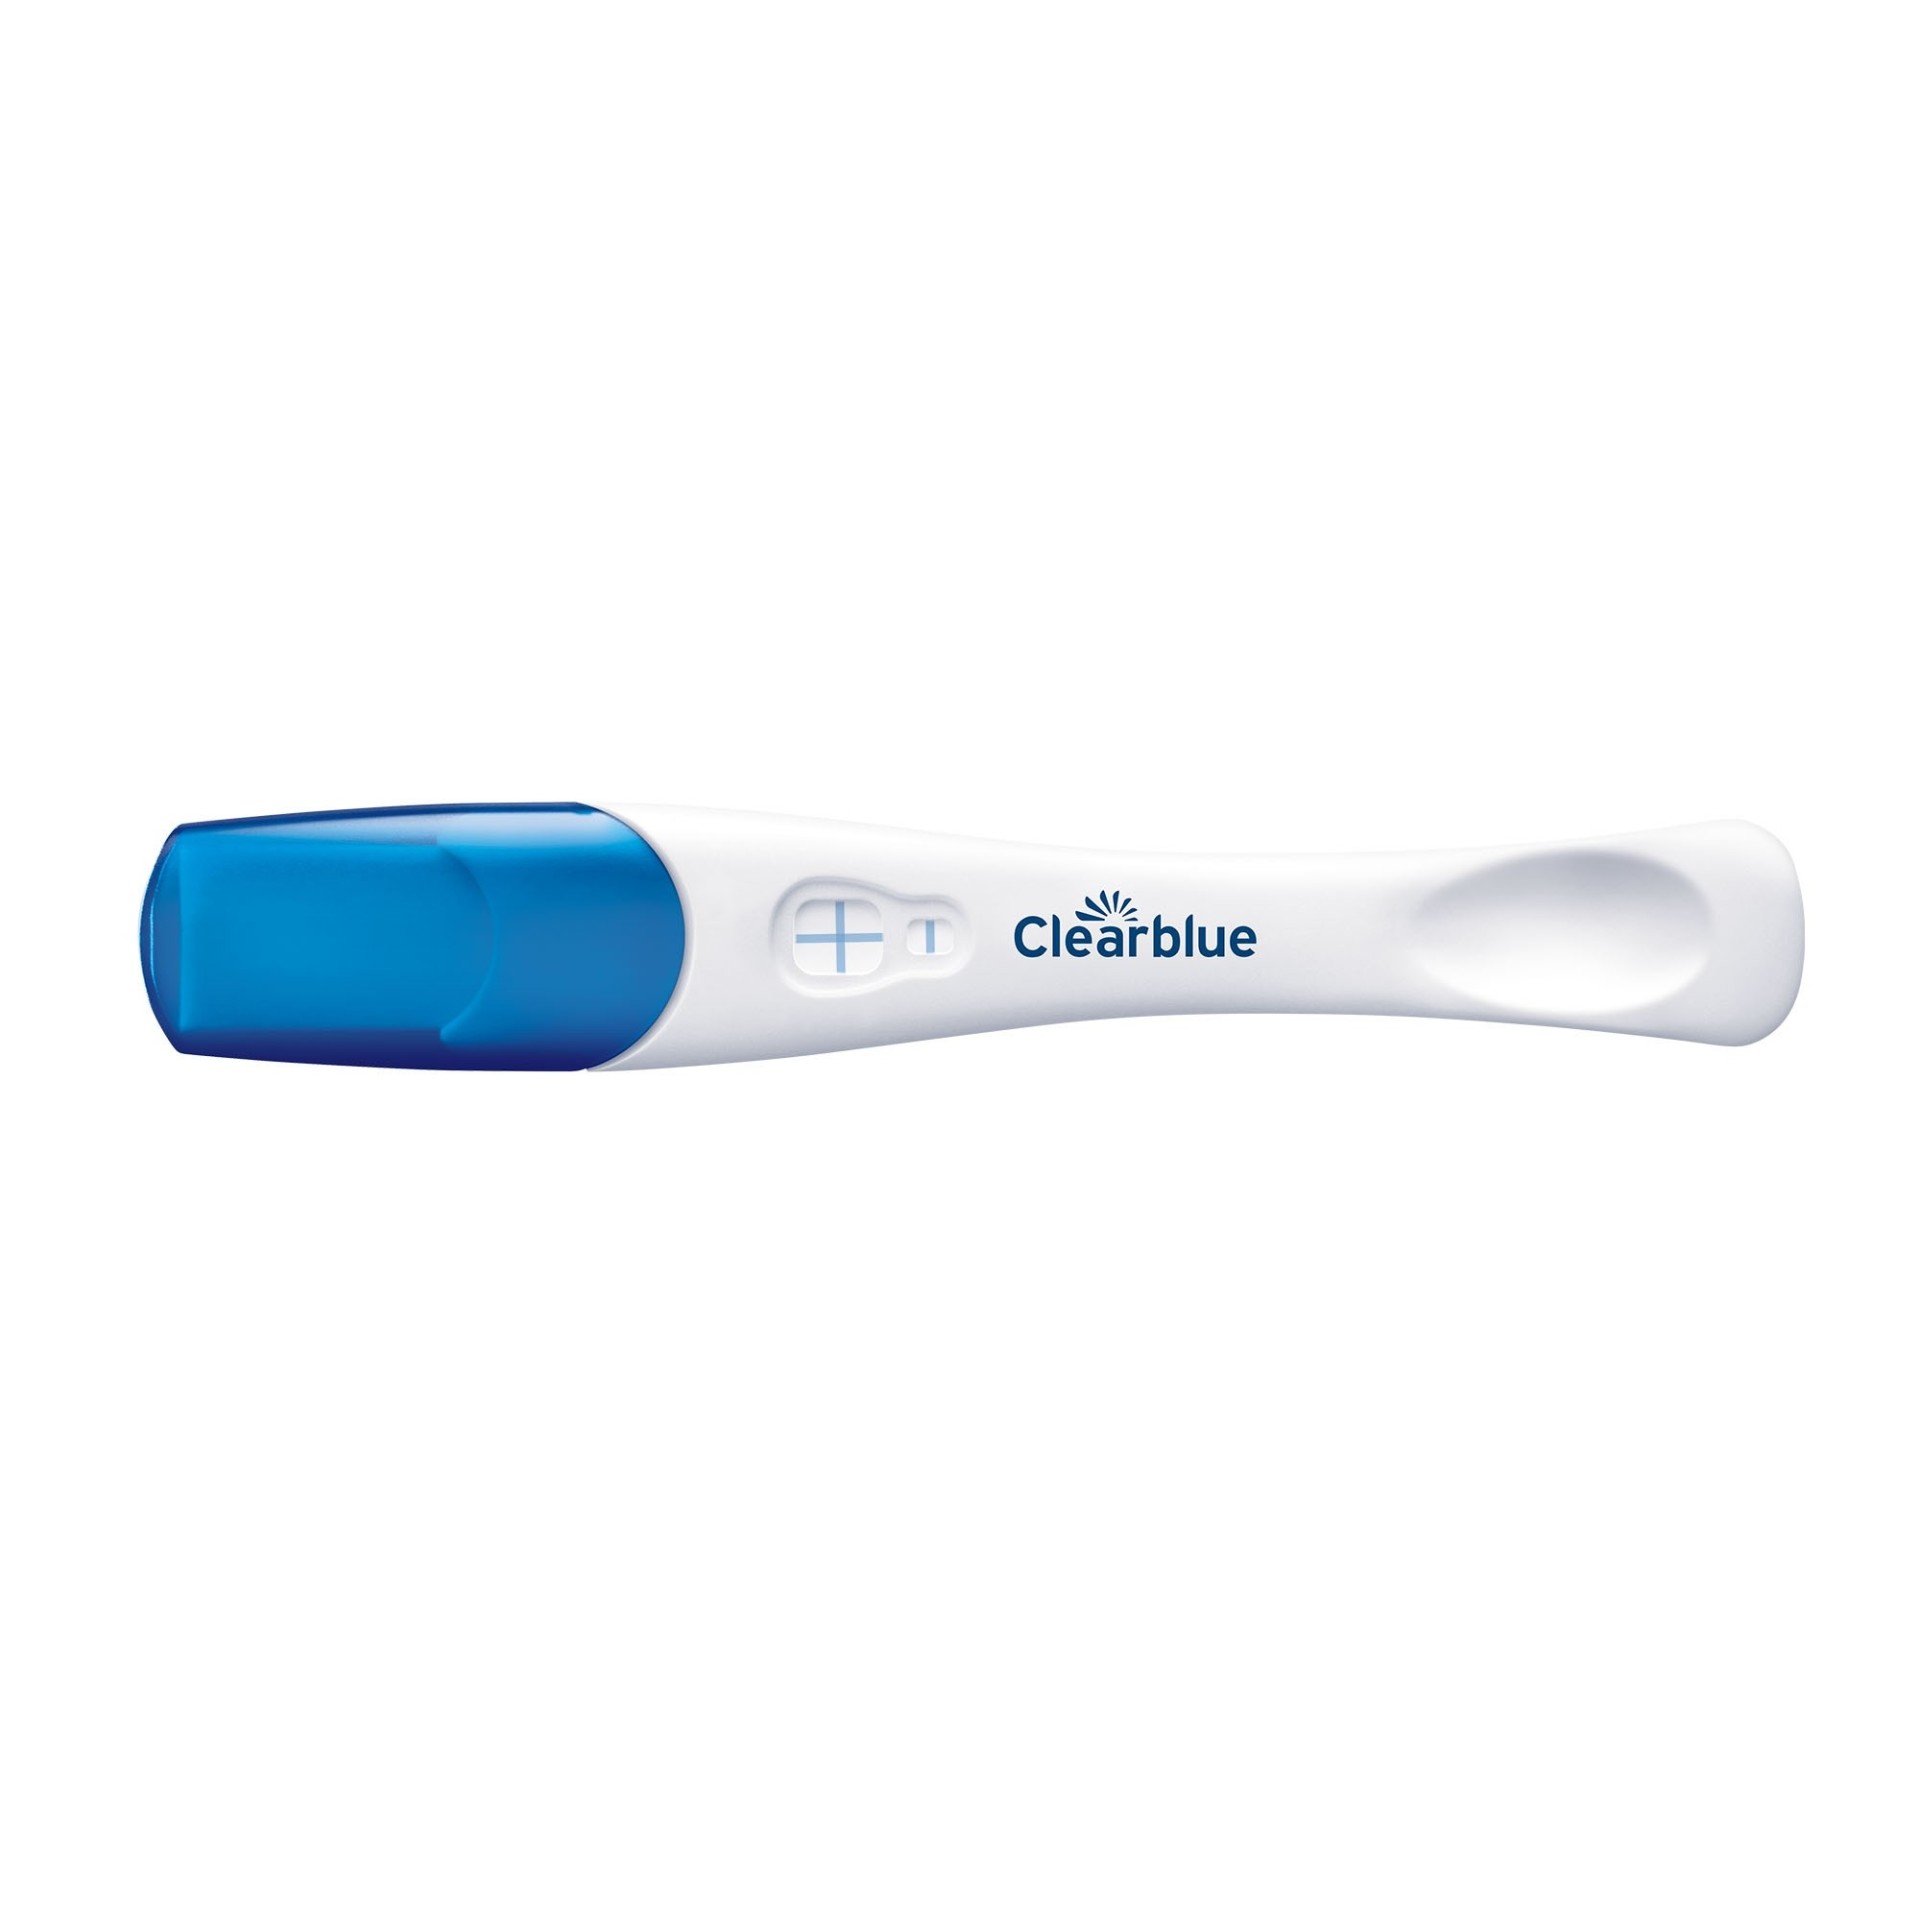 Тест для определения беременности Clearblue Compact Упаковка №1